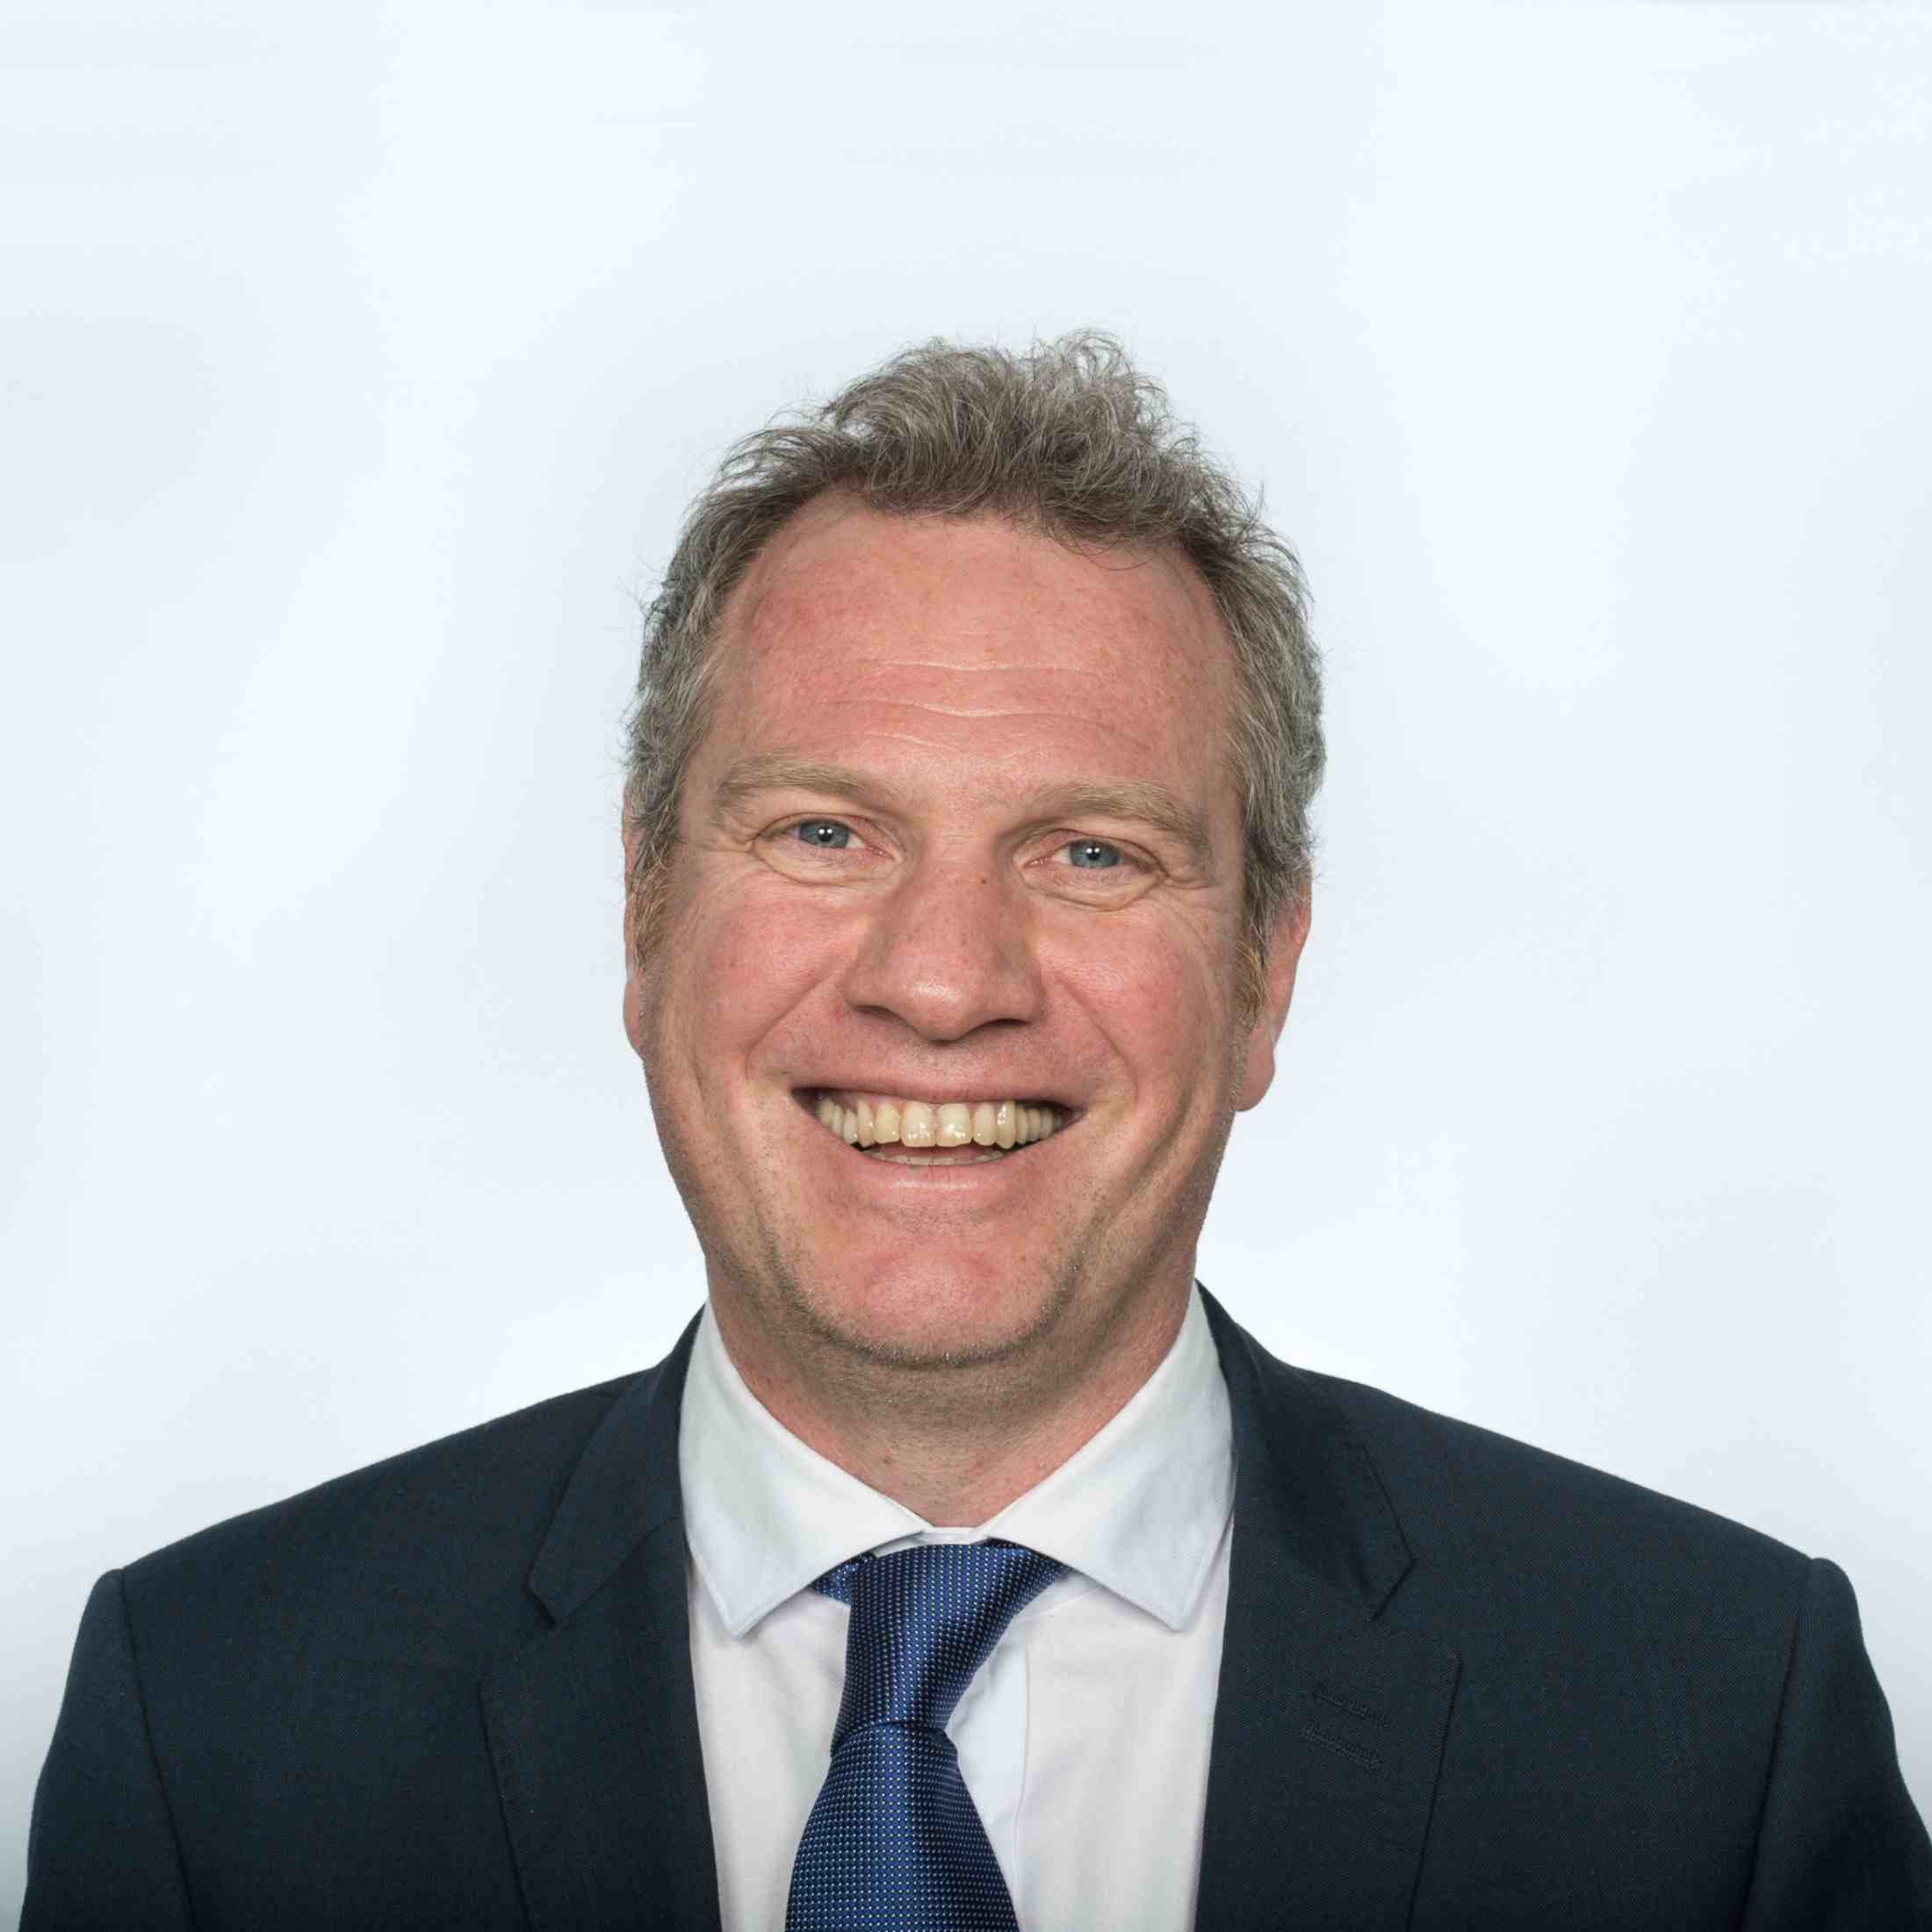 headshot of Guy-Laurent Epstein, Marketing Director at UEFA